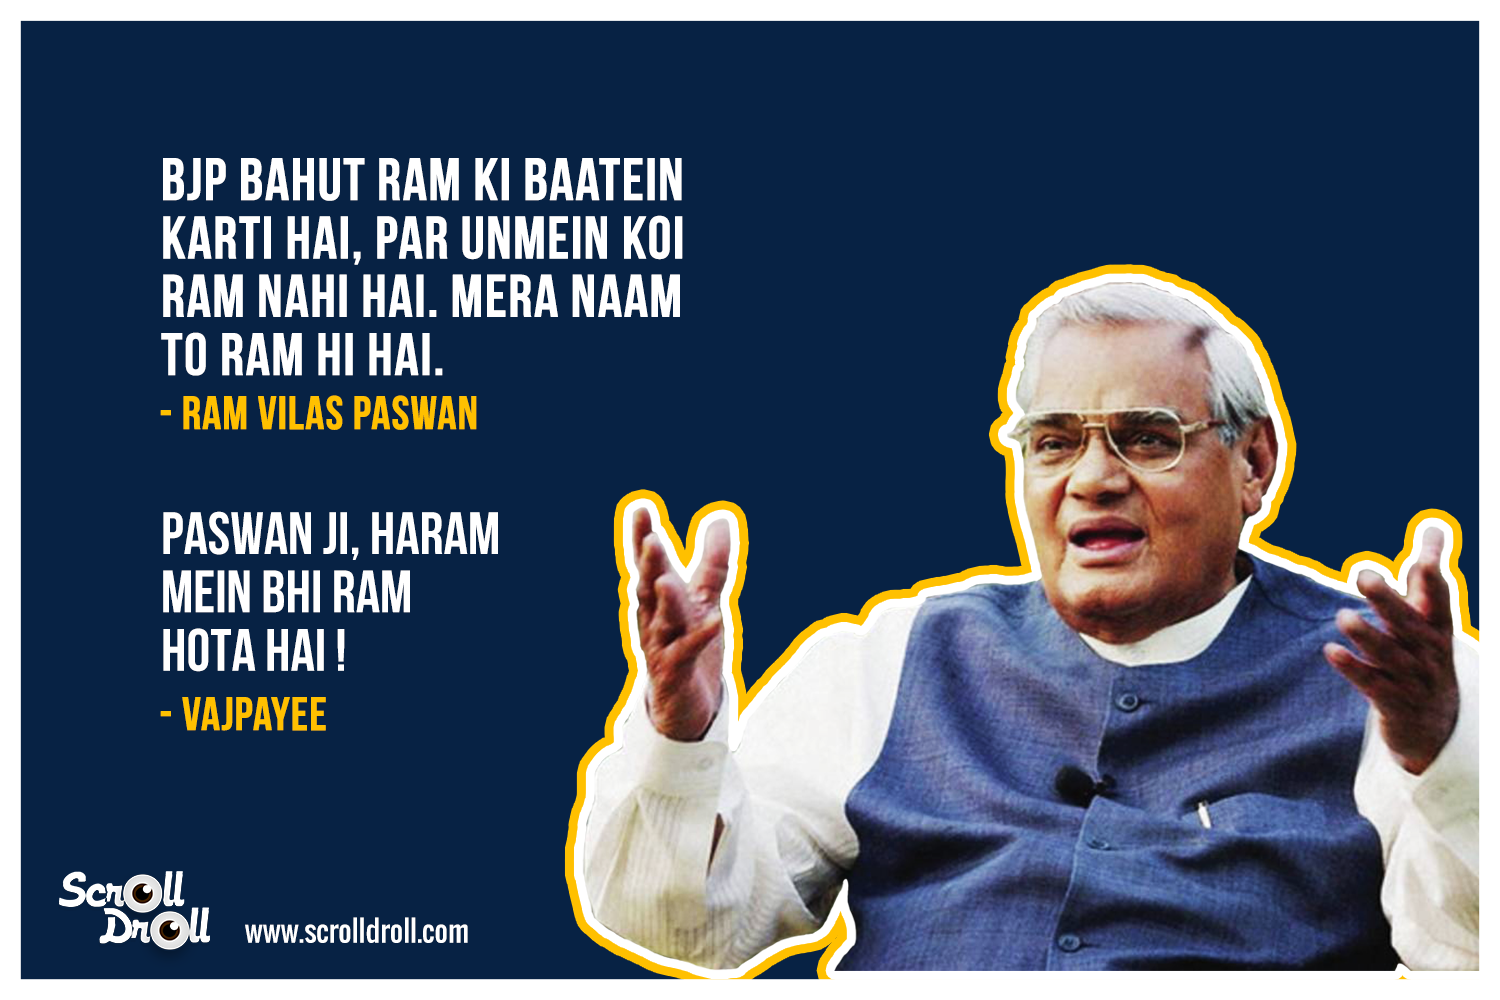 Atal Bihari Vajpayee quote 2 - ScrollDroll